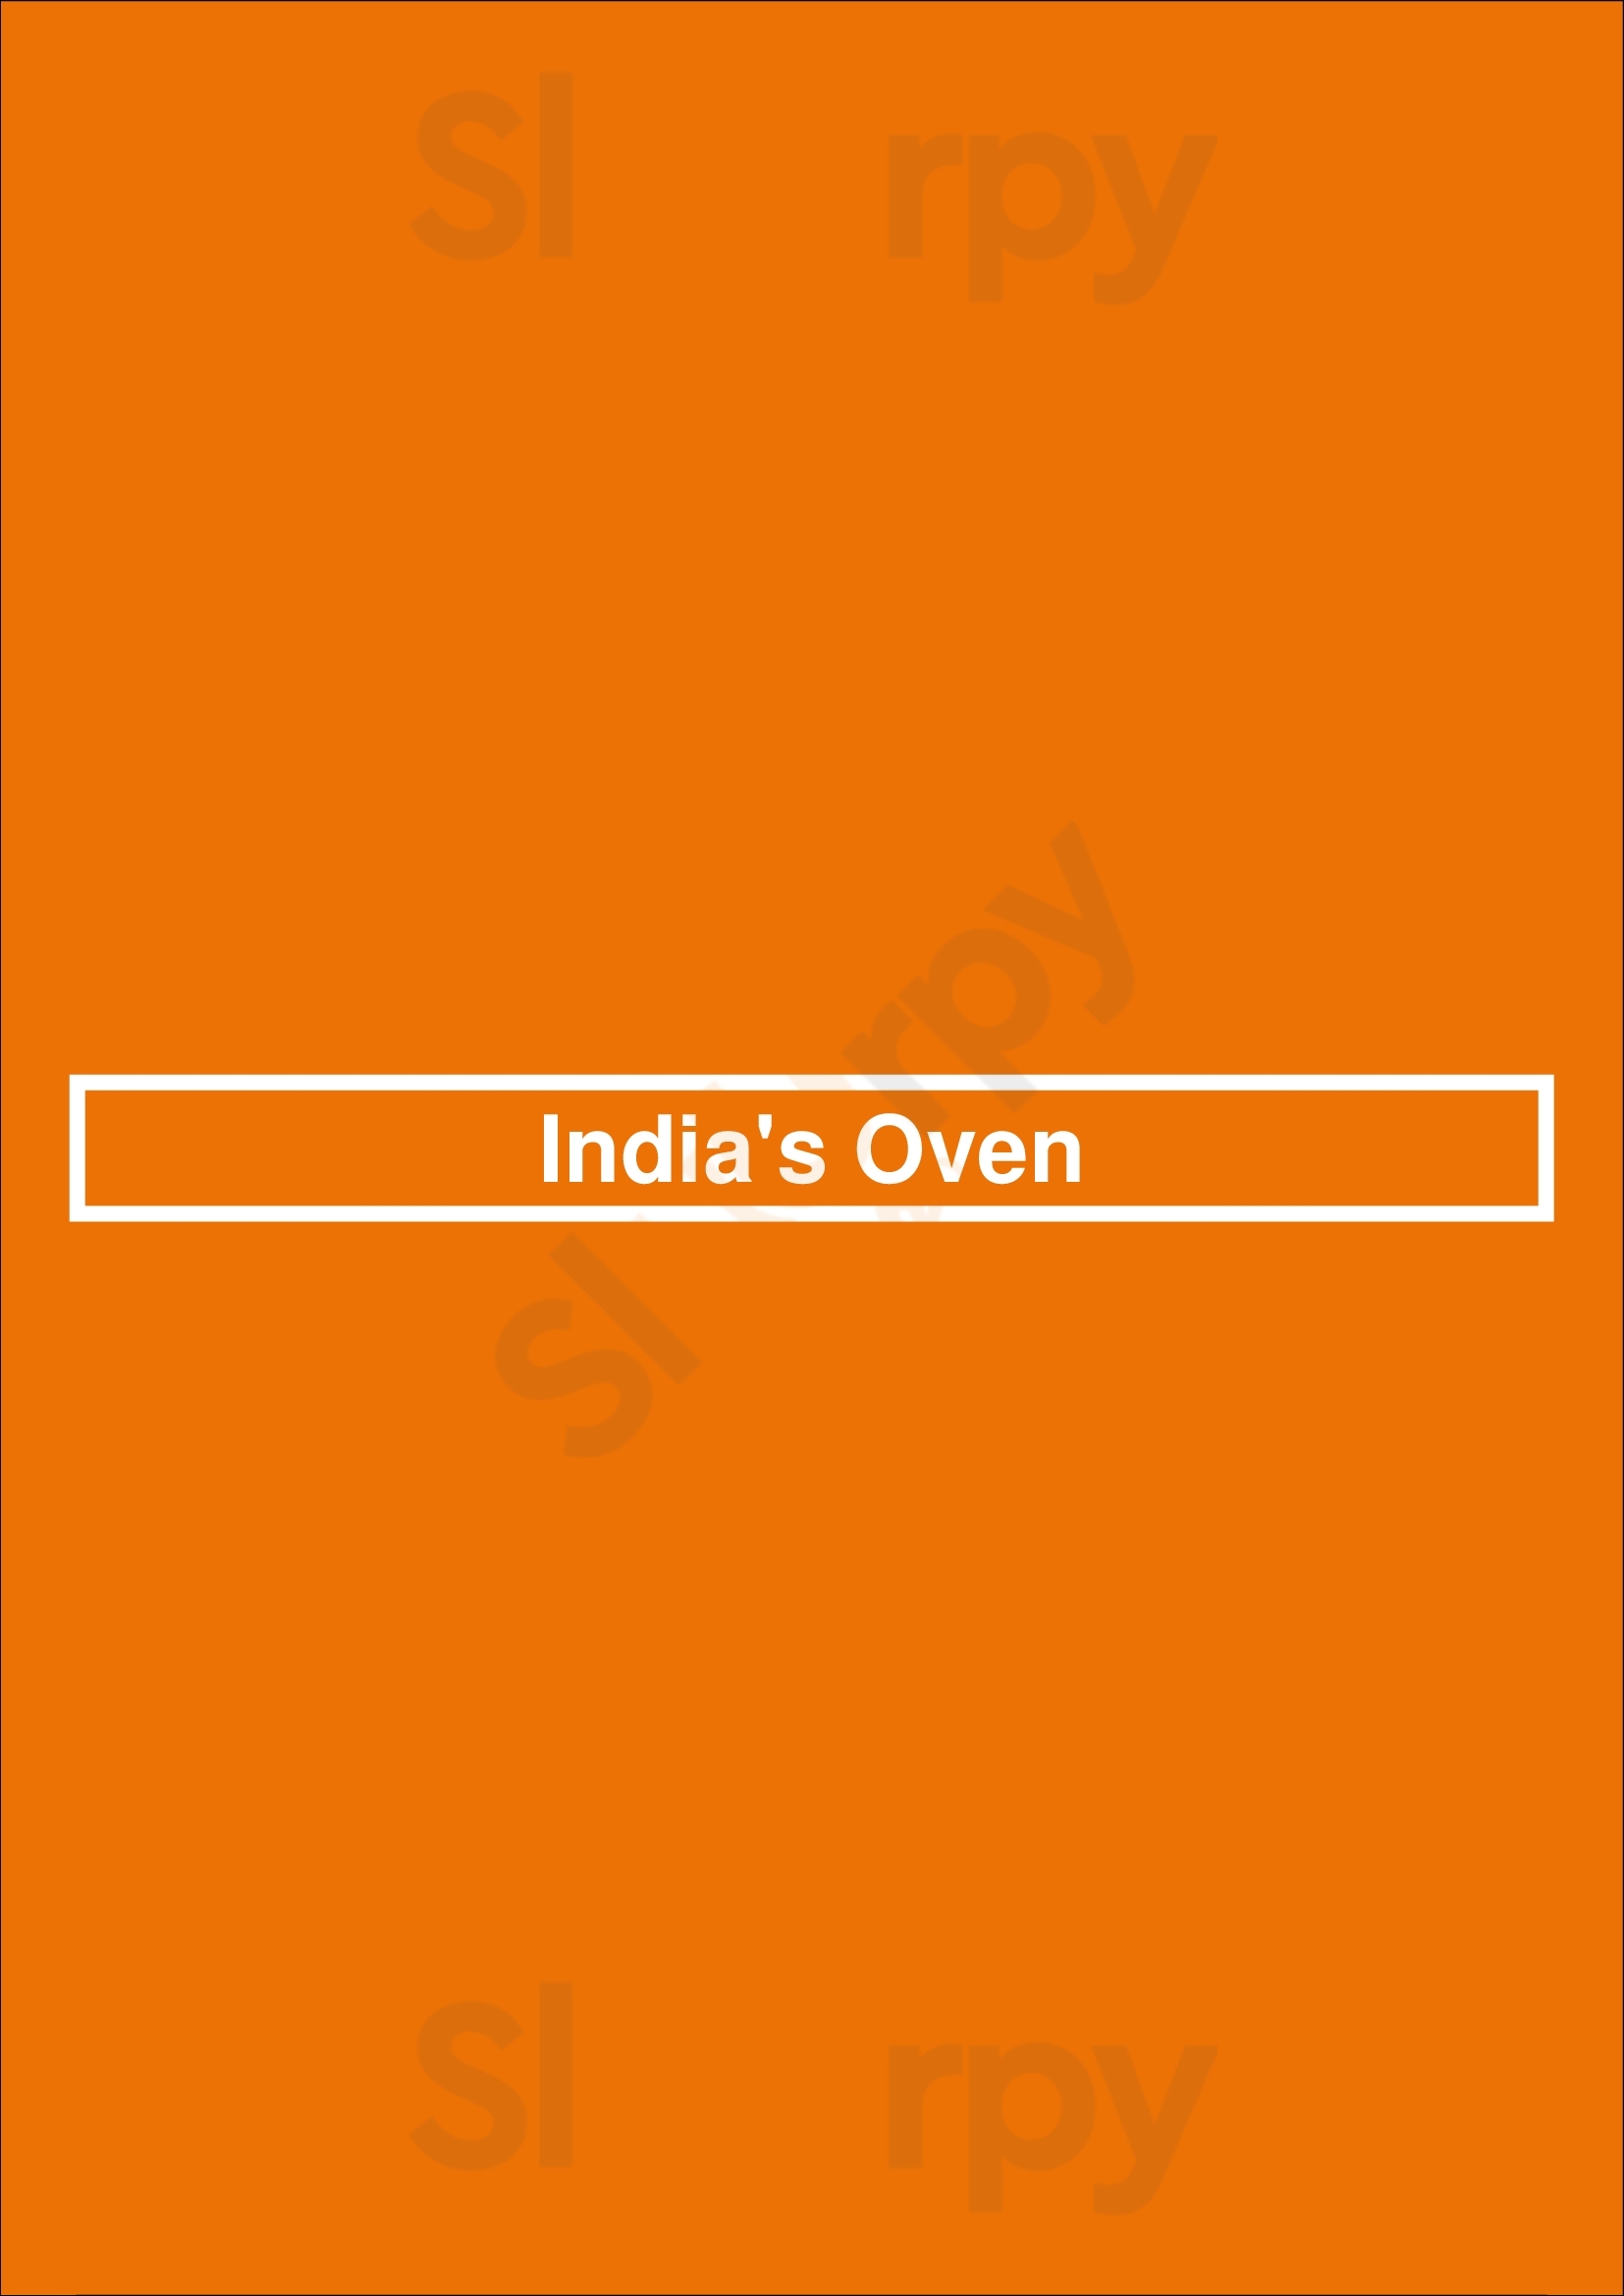 India's Oven Los Angeles Menu - 1